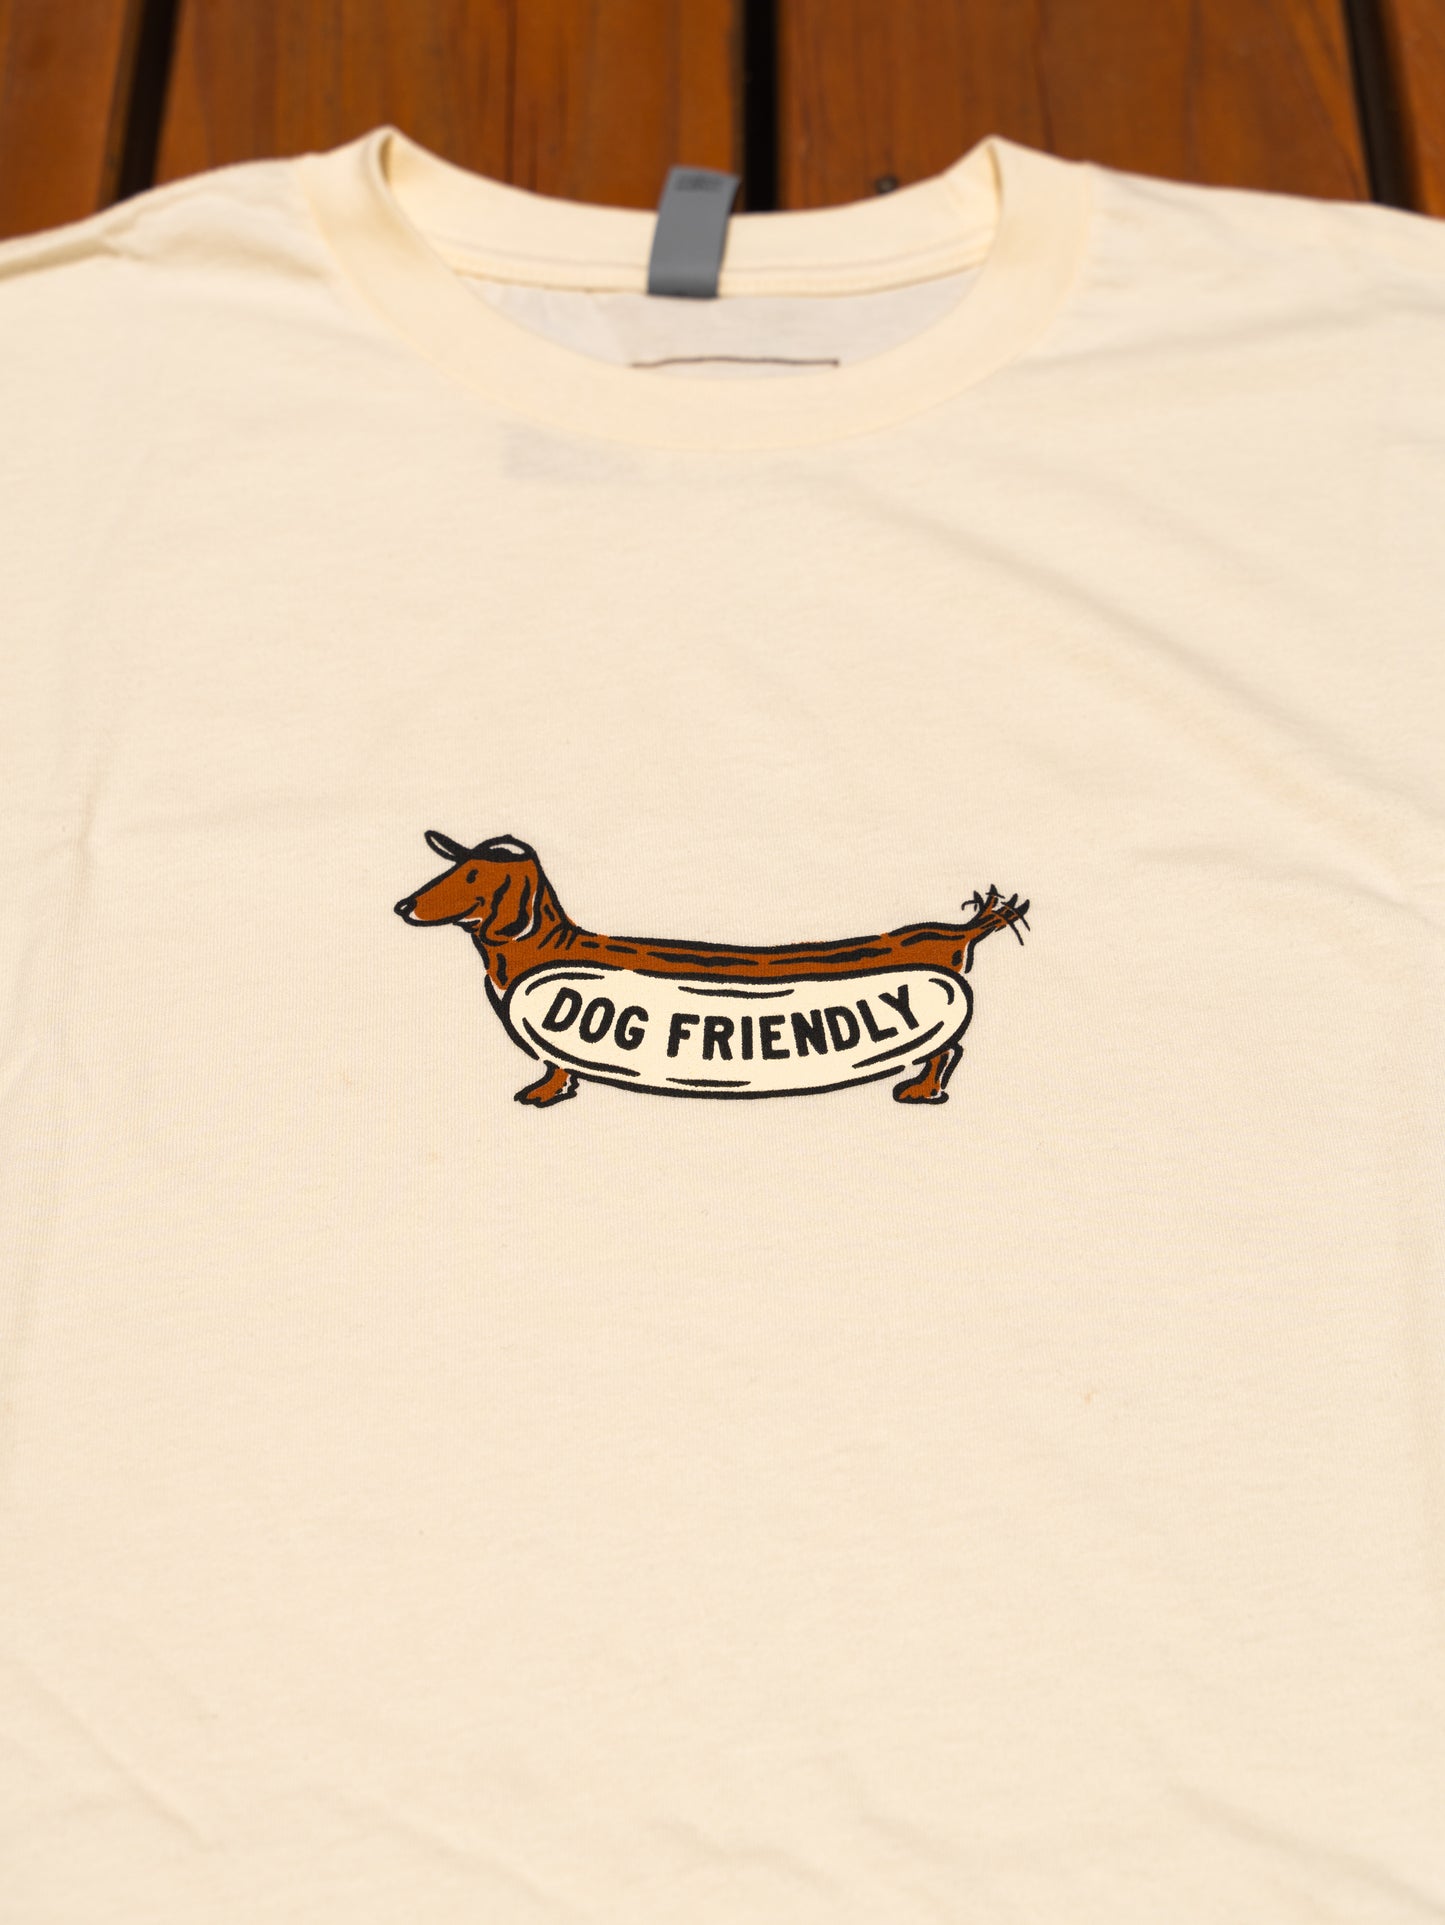 "Dog Friendly" Tee